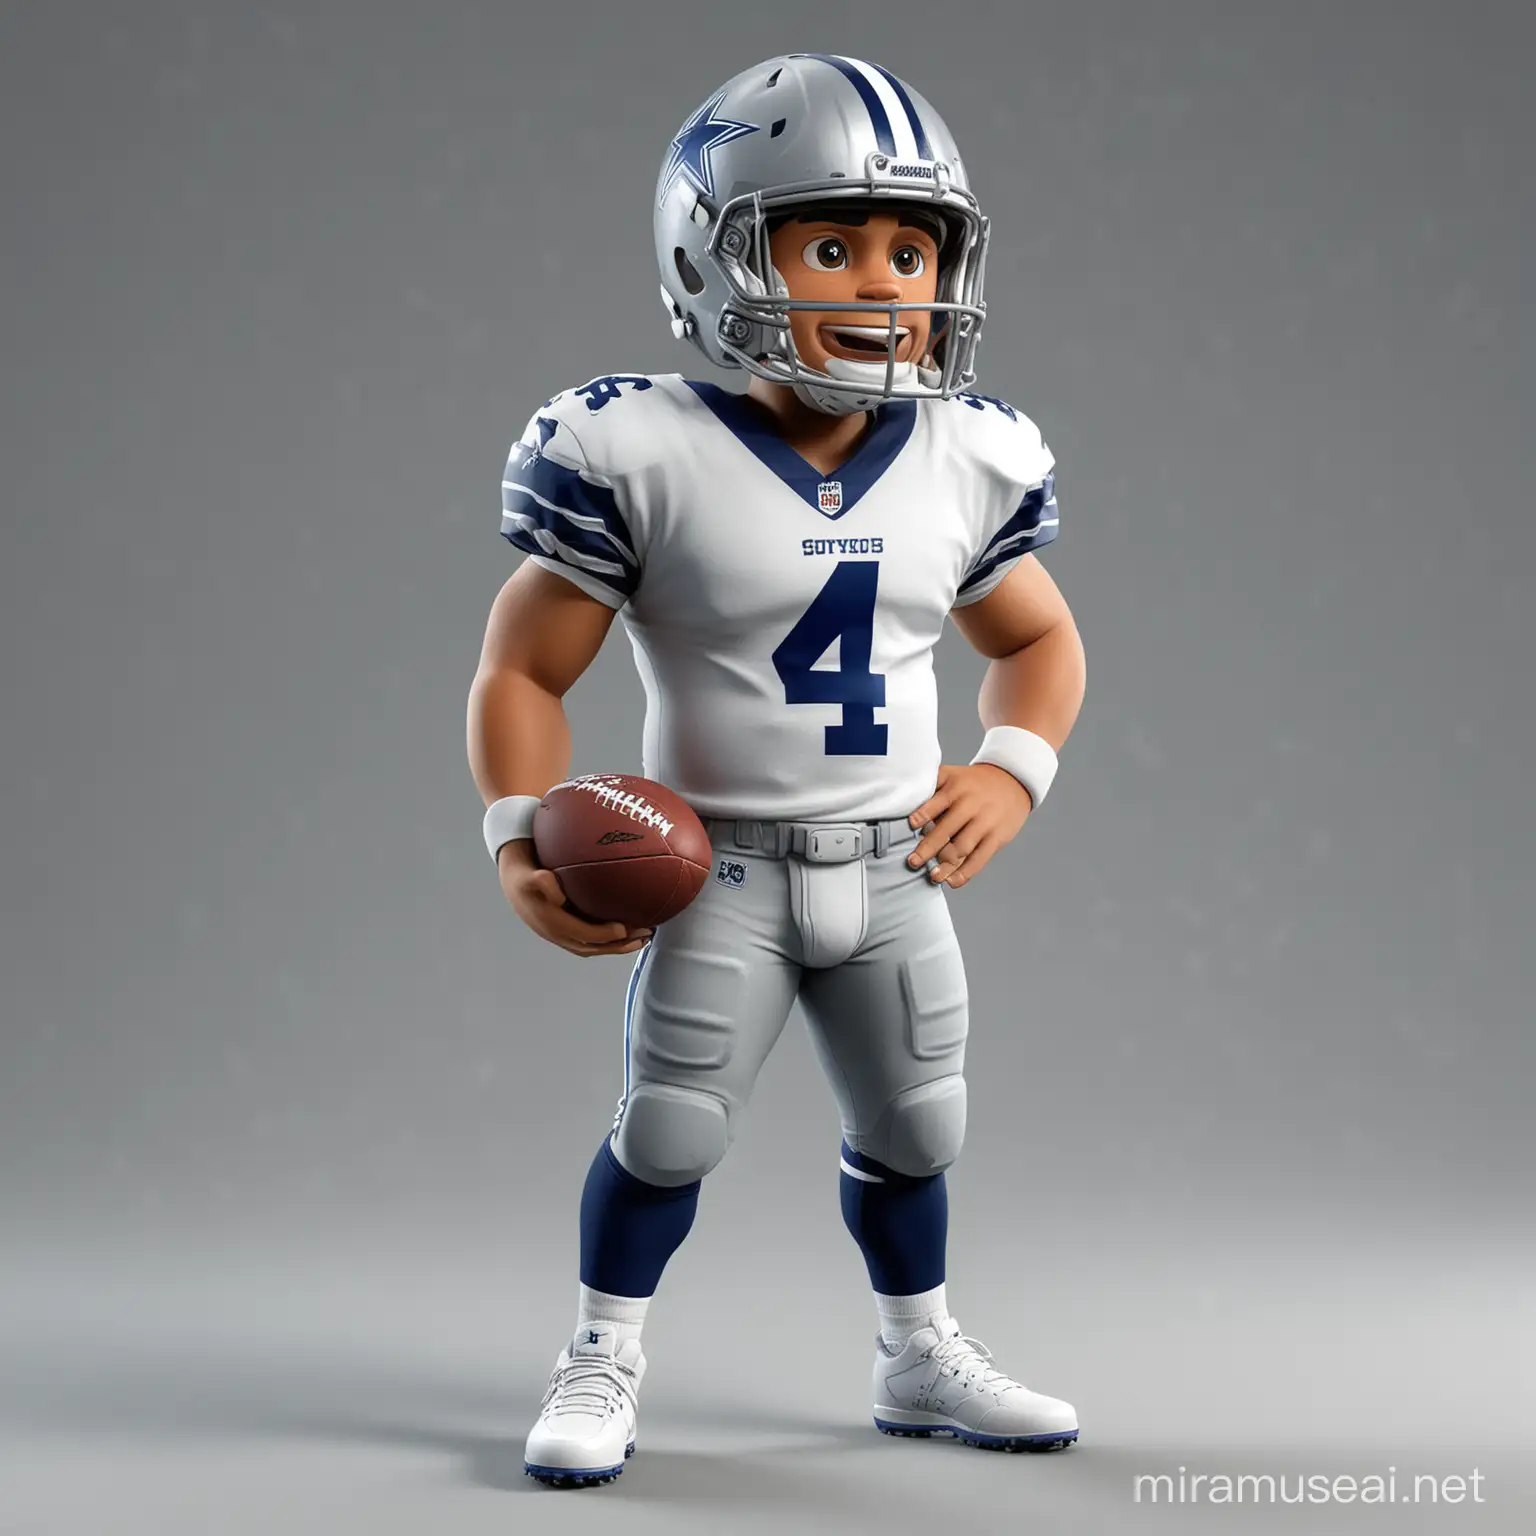 Adorable 3D Rendered NFL Player in Dak Prescotts Dallas Cowboys Gear